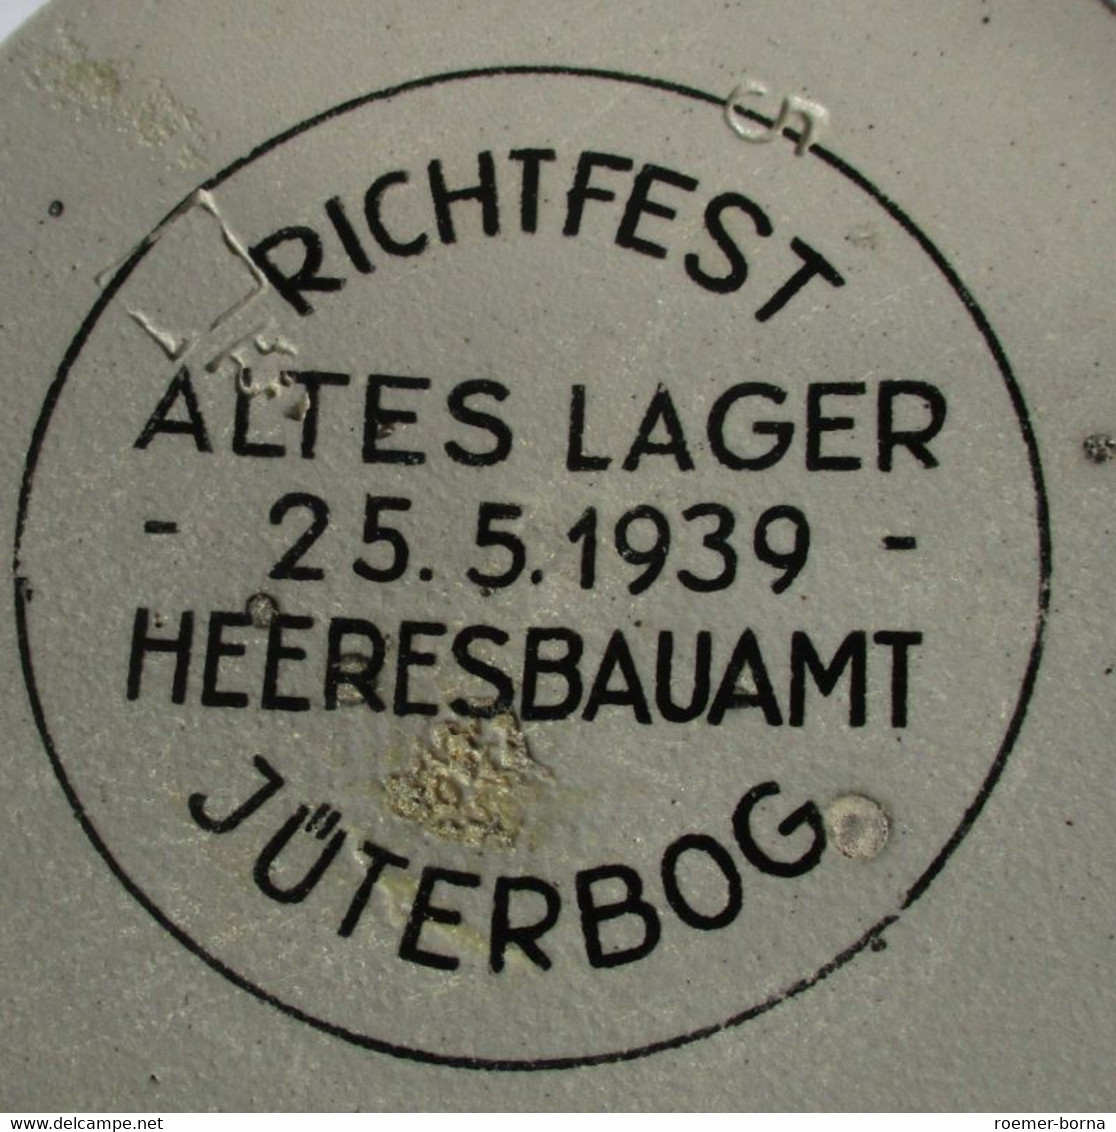 Steinzeug Bierkrug Richtfest Altes Lager Heeresbauamt Jüterbog 1939 (134771)